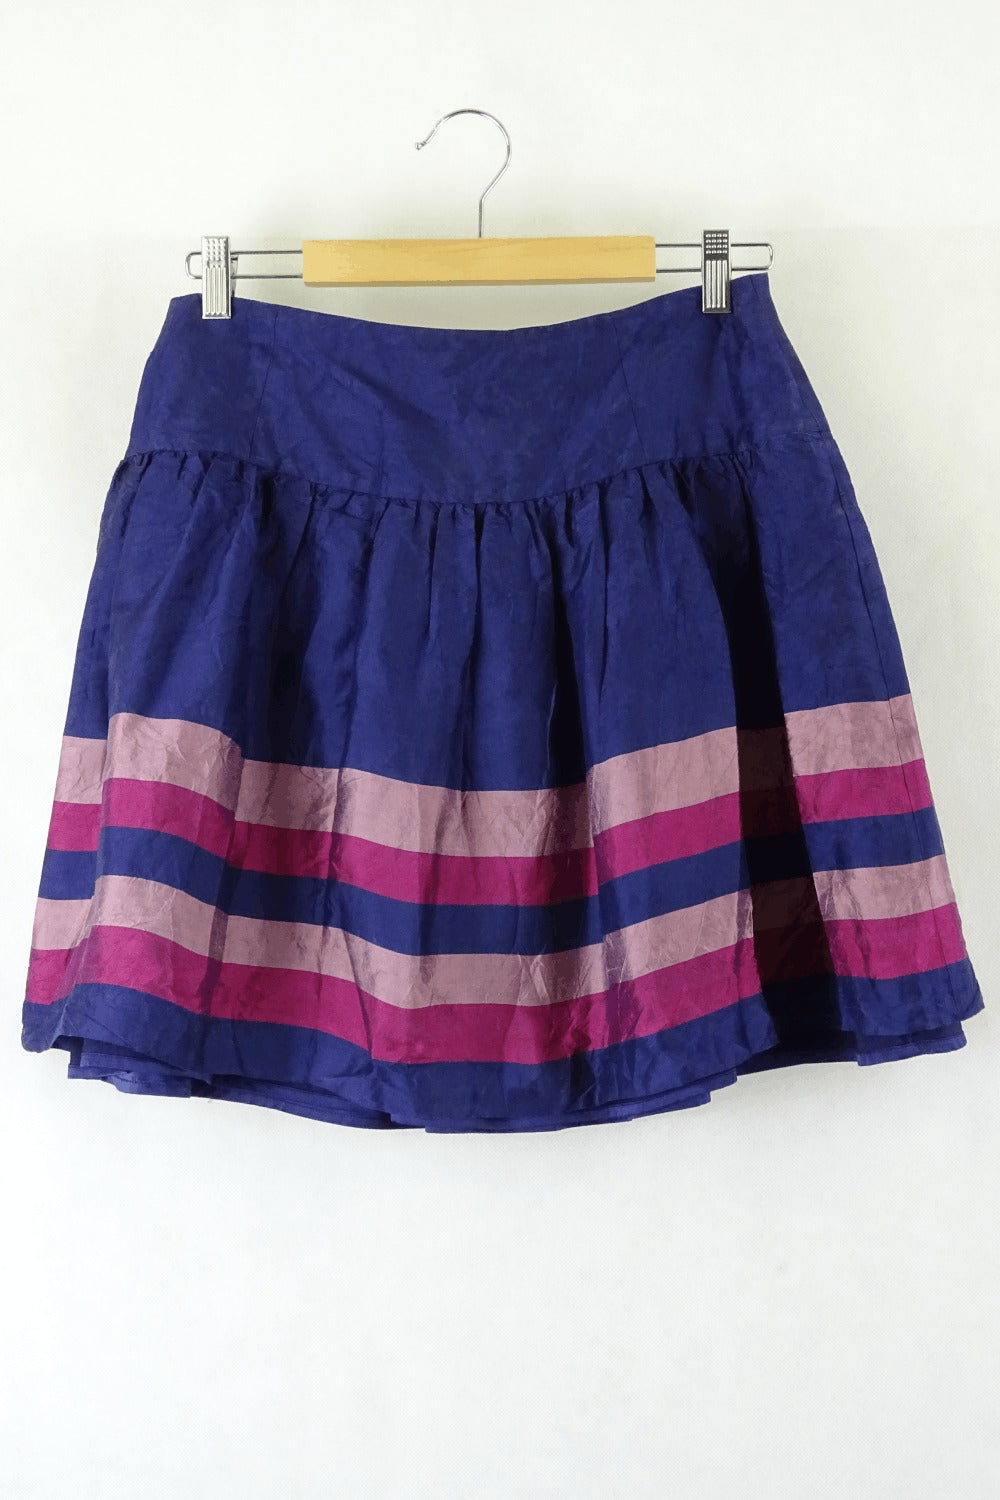 Alannah Hill Flared Navy Striped Mini Skirt 10